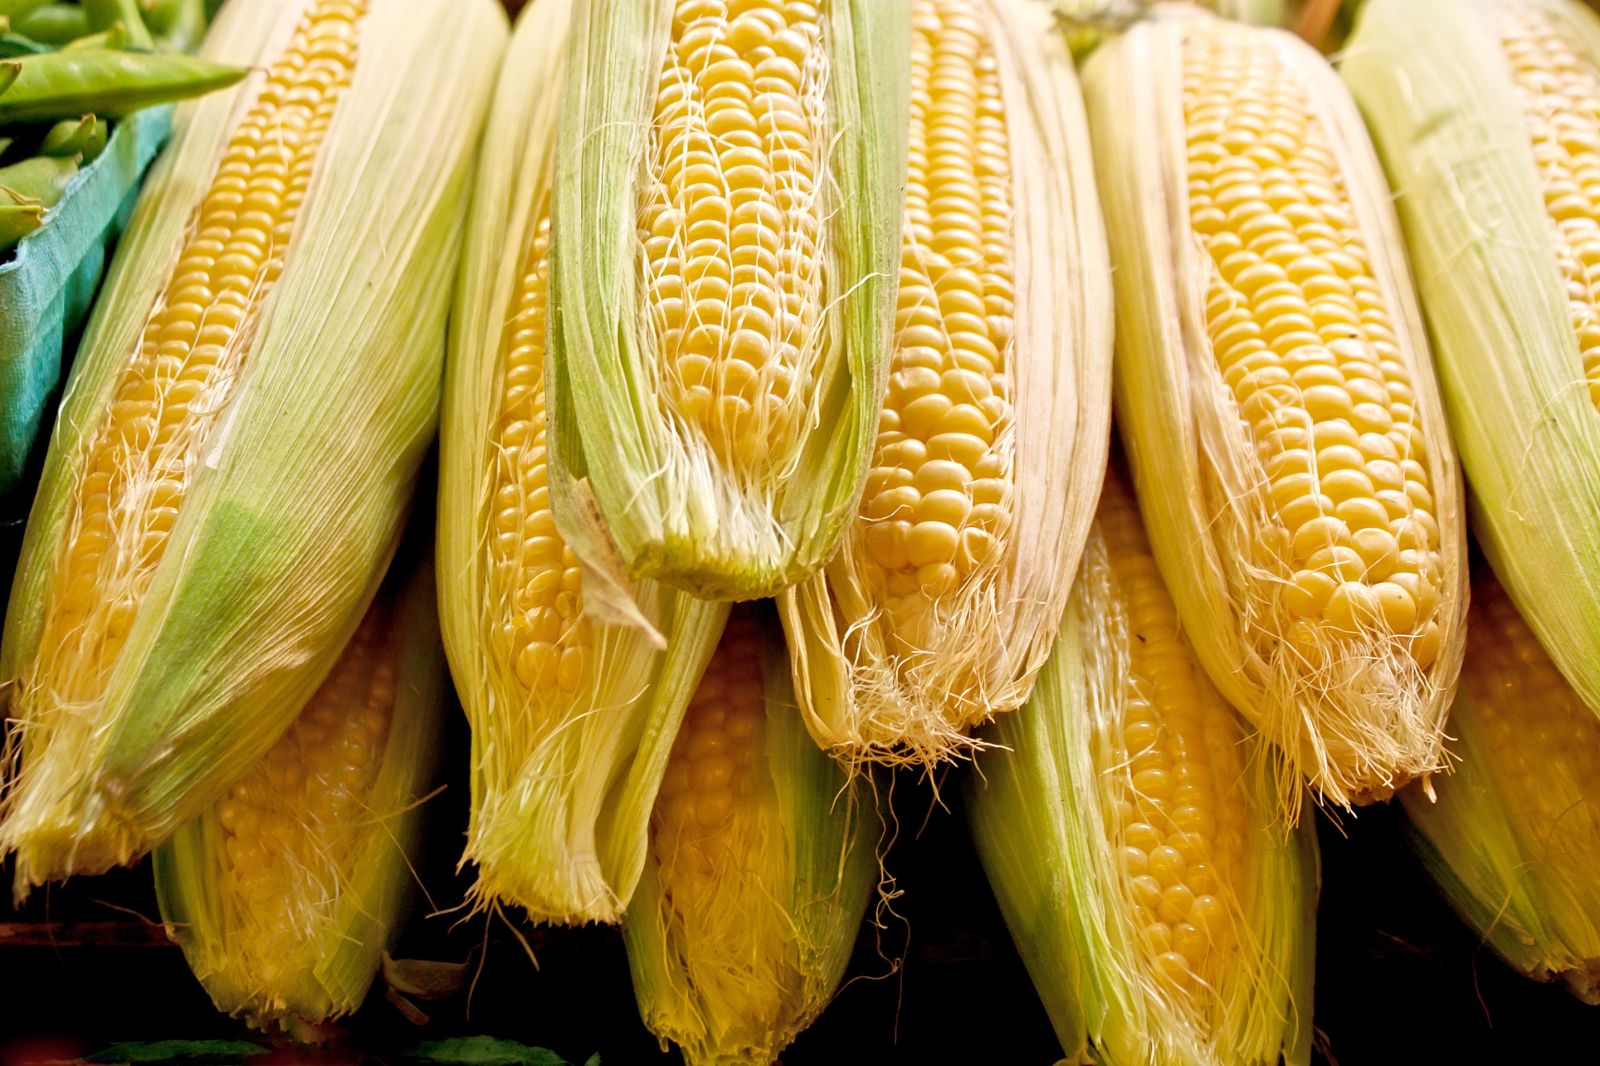 Market corn on the cob via Storyblocks